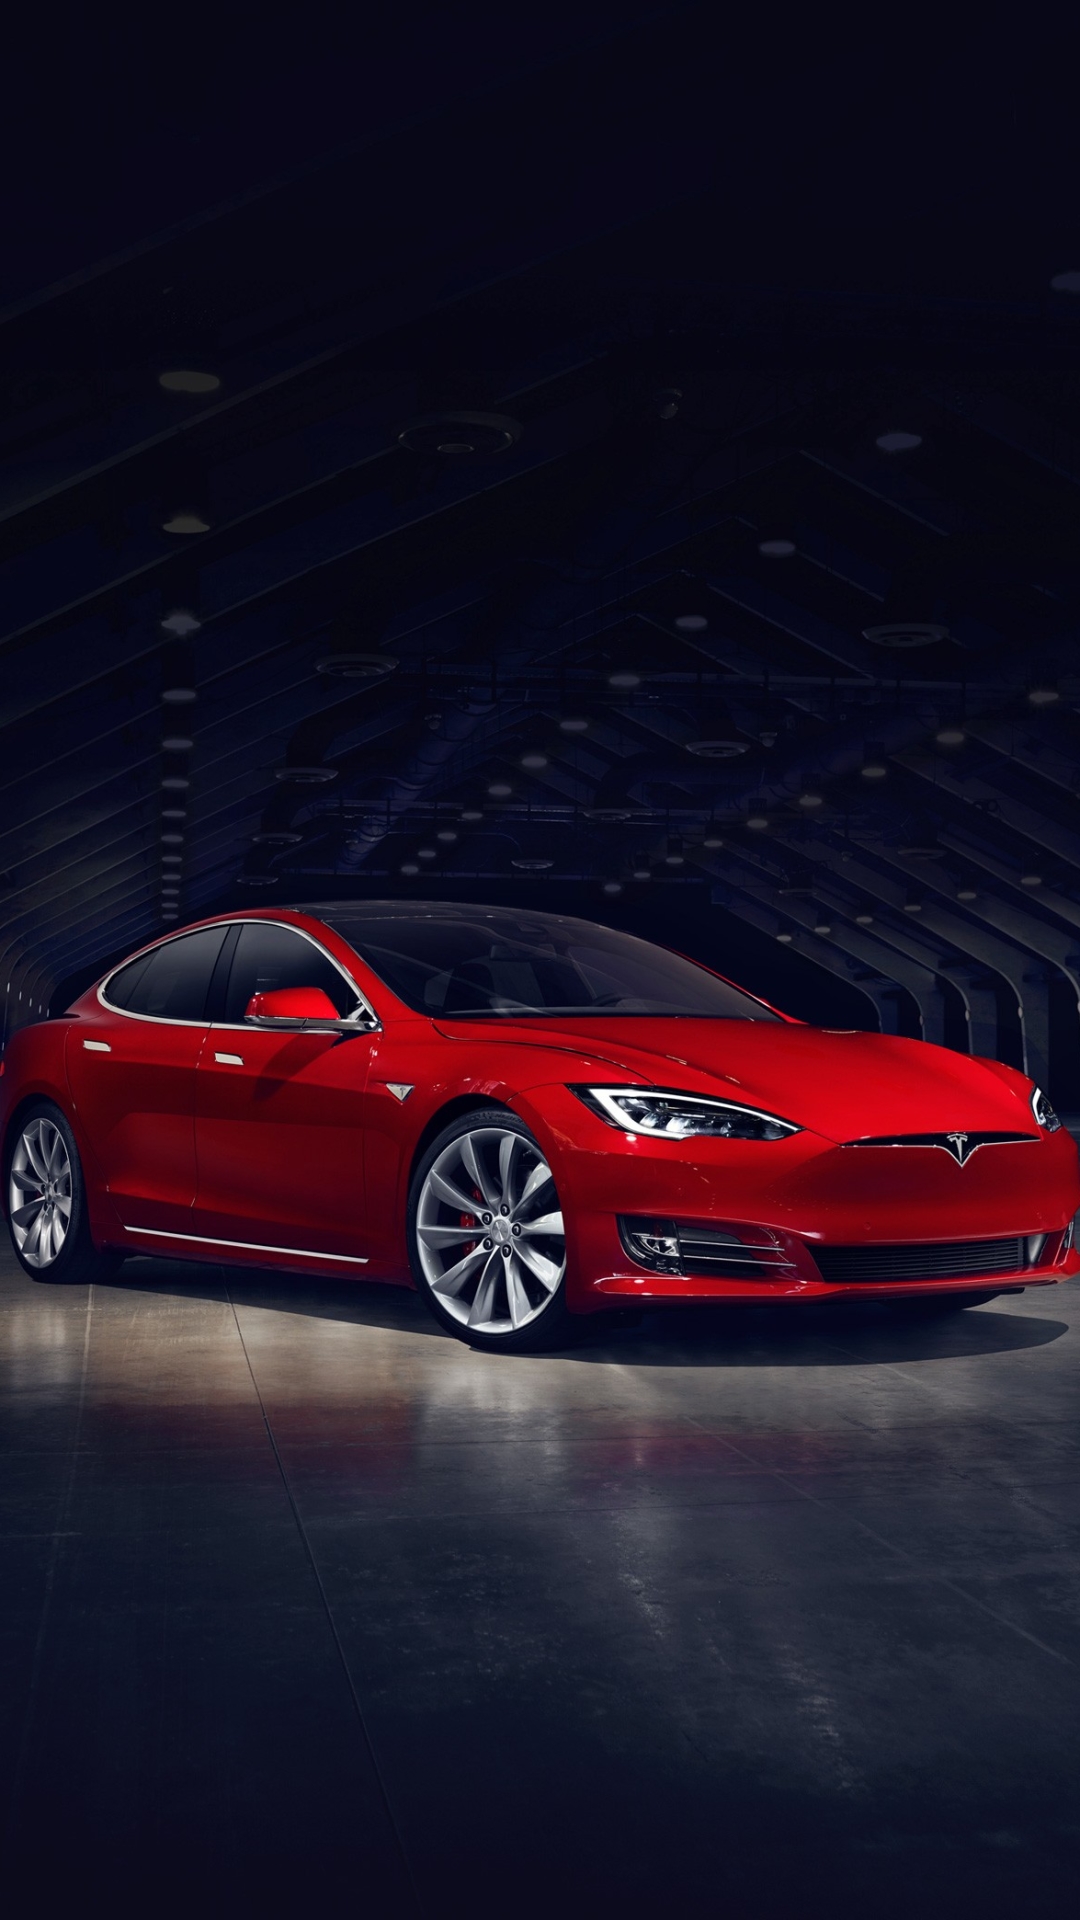 Descarga gratuita de fondo de pantalla para móvil de Tesla Modelo S, Coche Eléctrico, Motores Tesla, Vehículos.